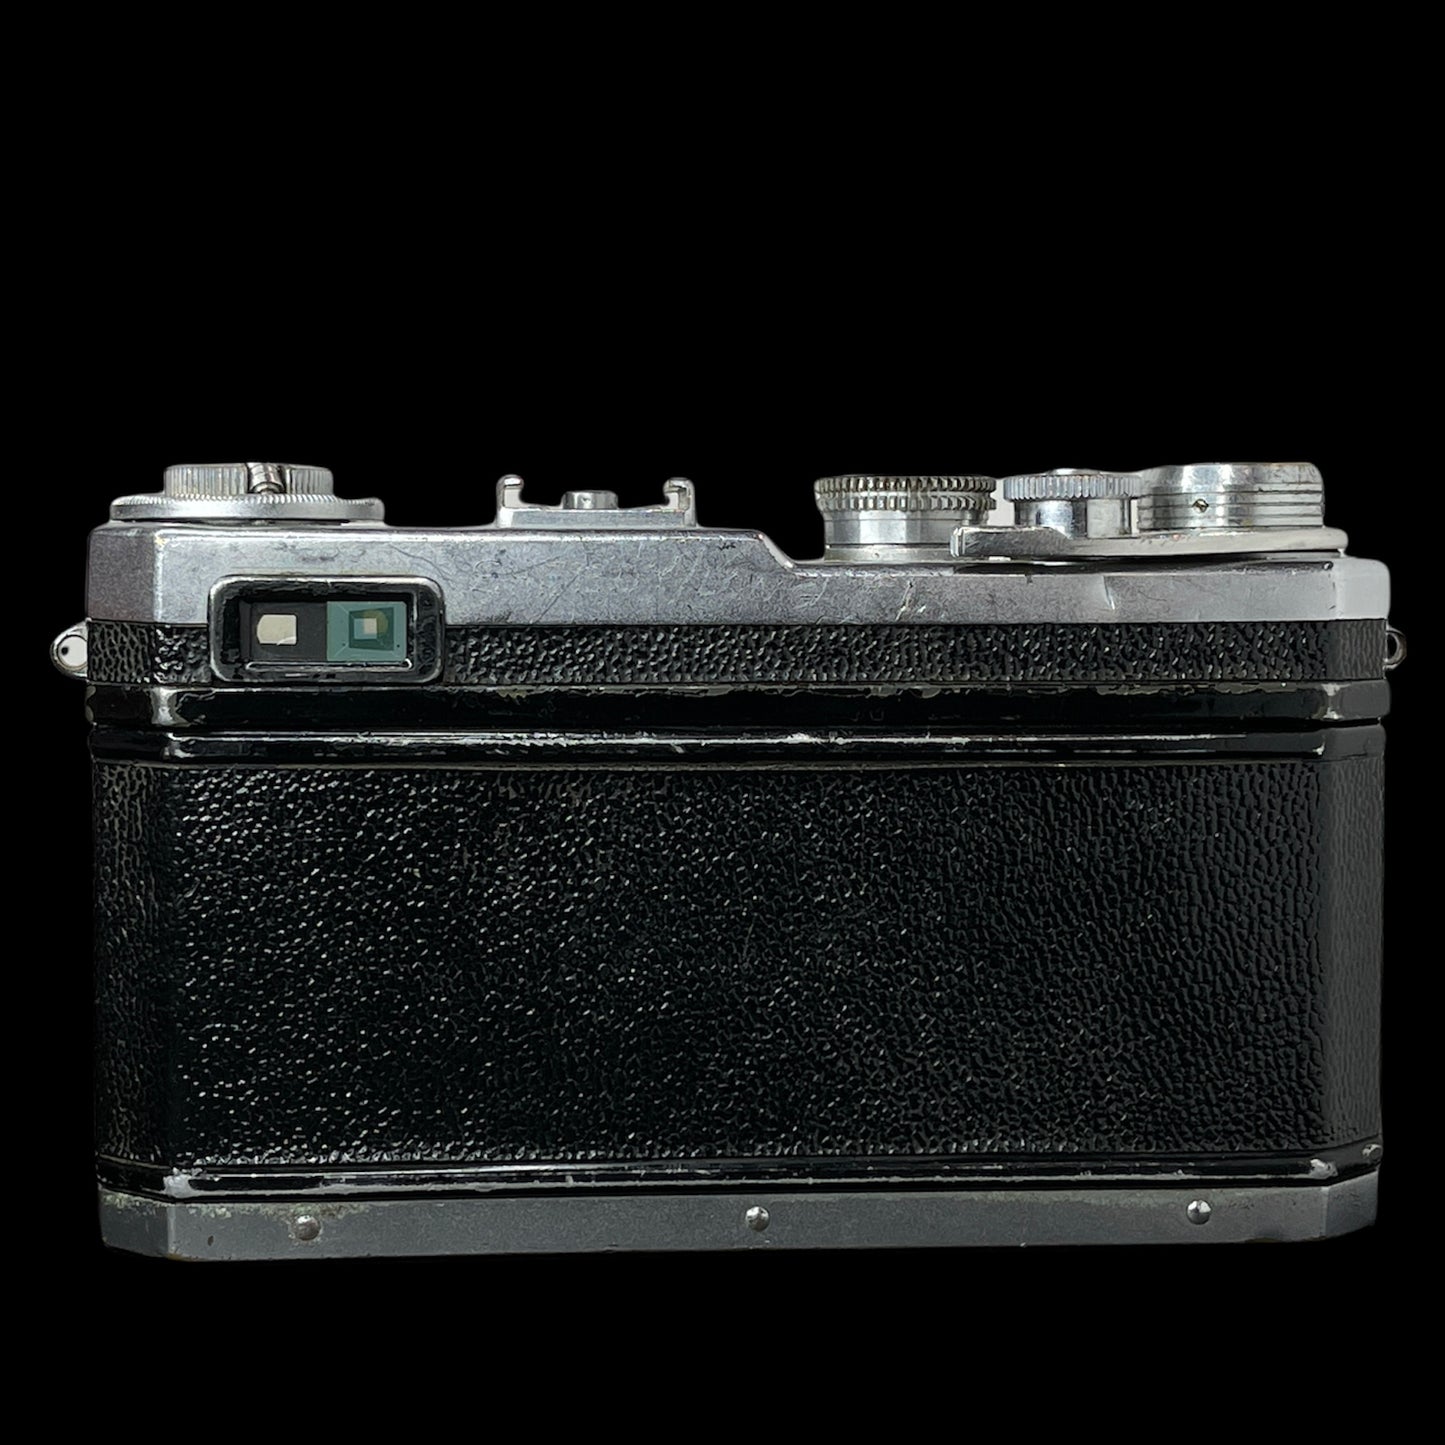 Nikon SP w/ 5cm f/1.4 "Sheedy & Long" Mount Kennedy Camera JB